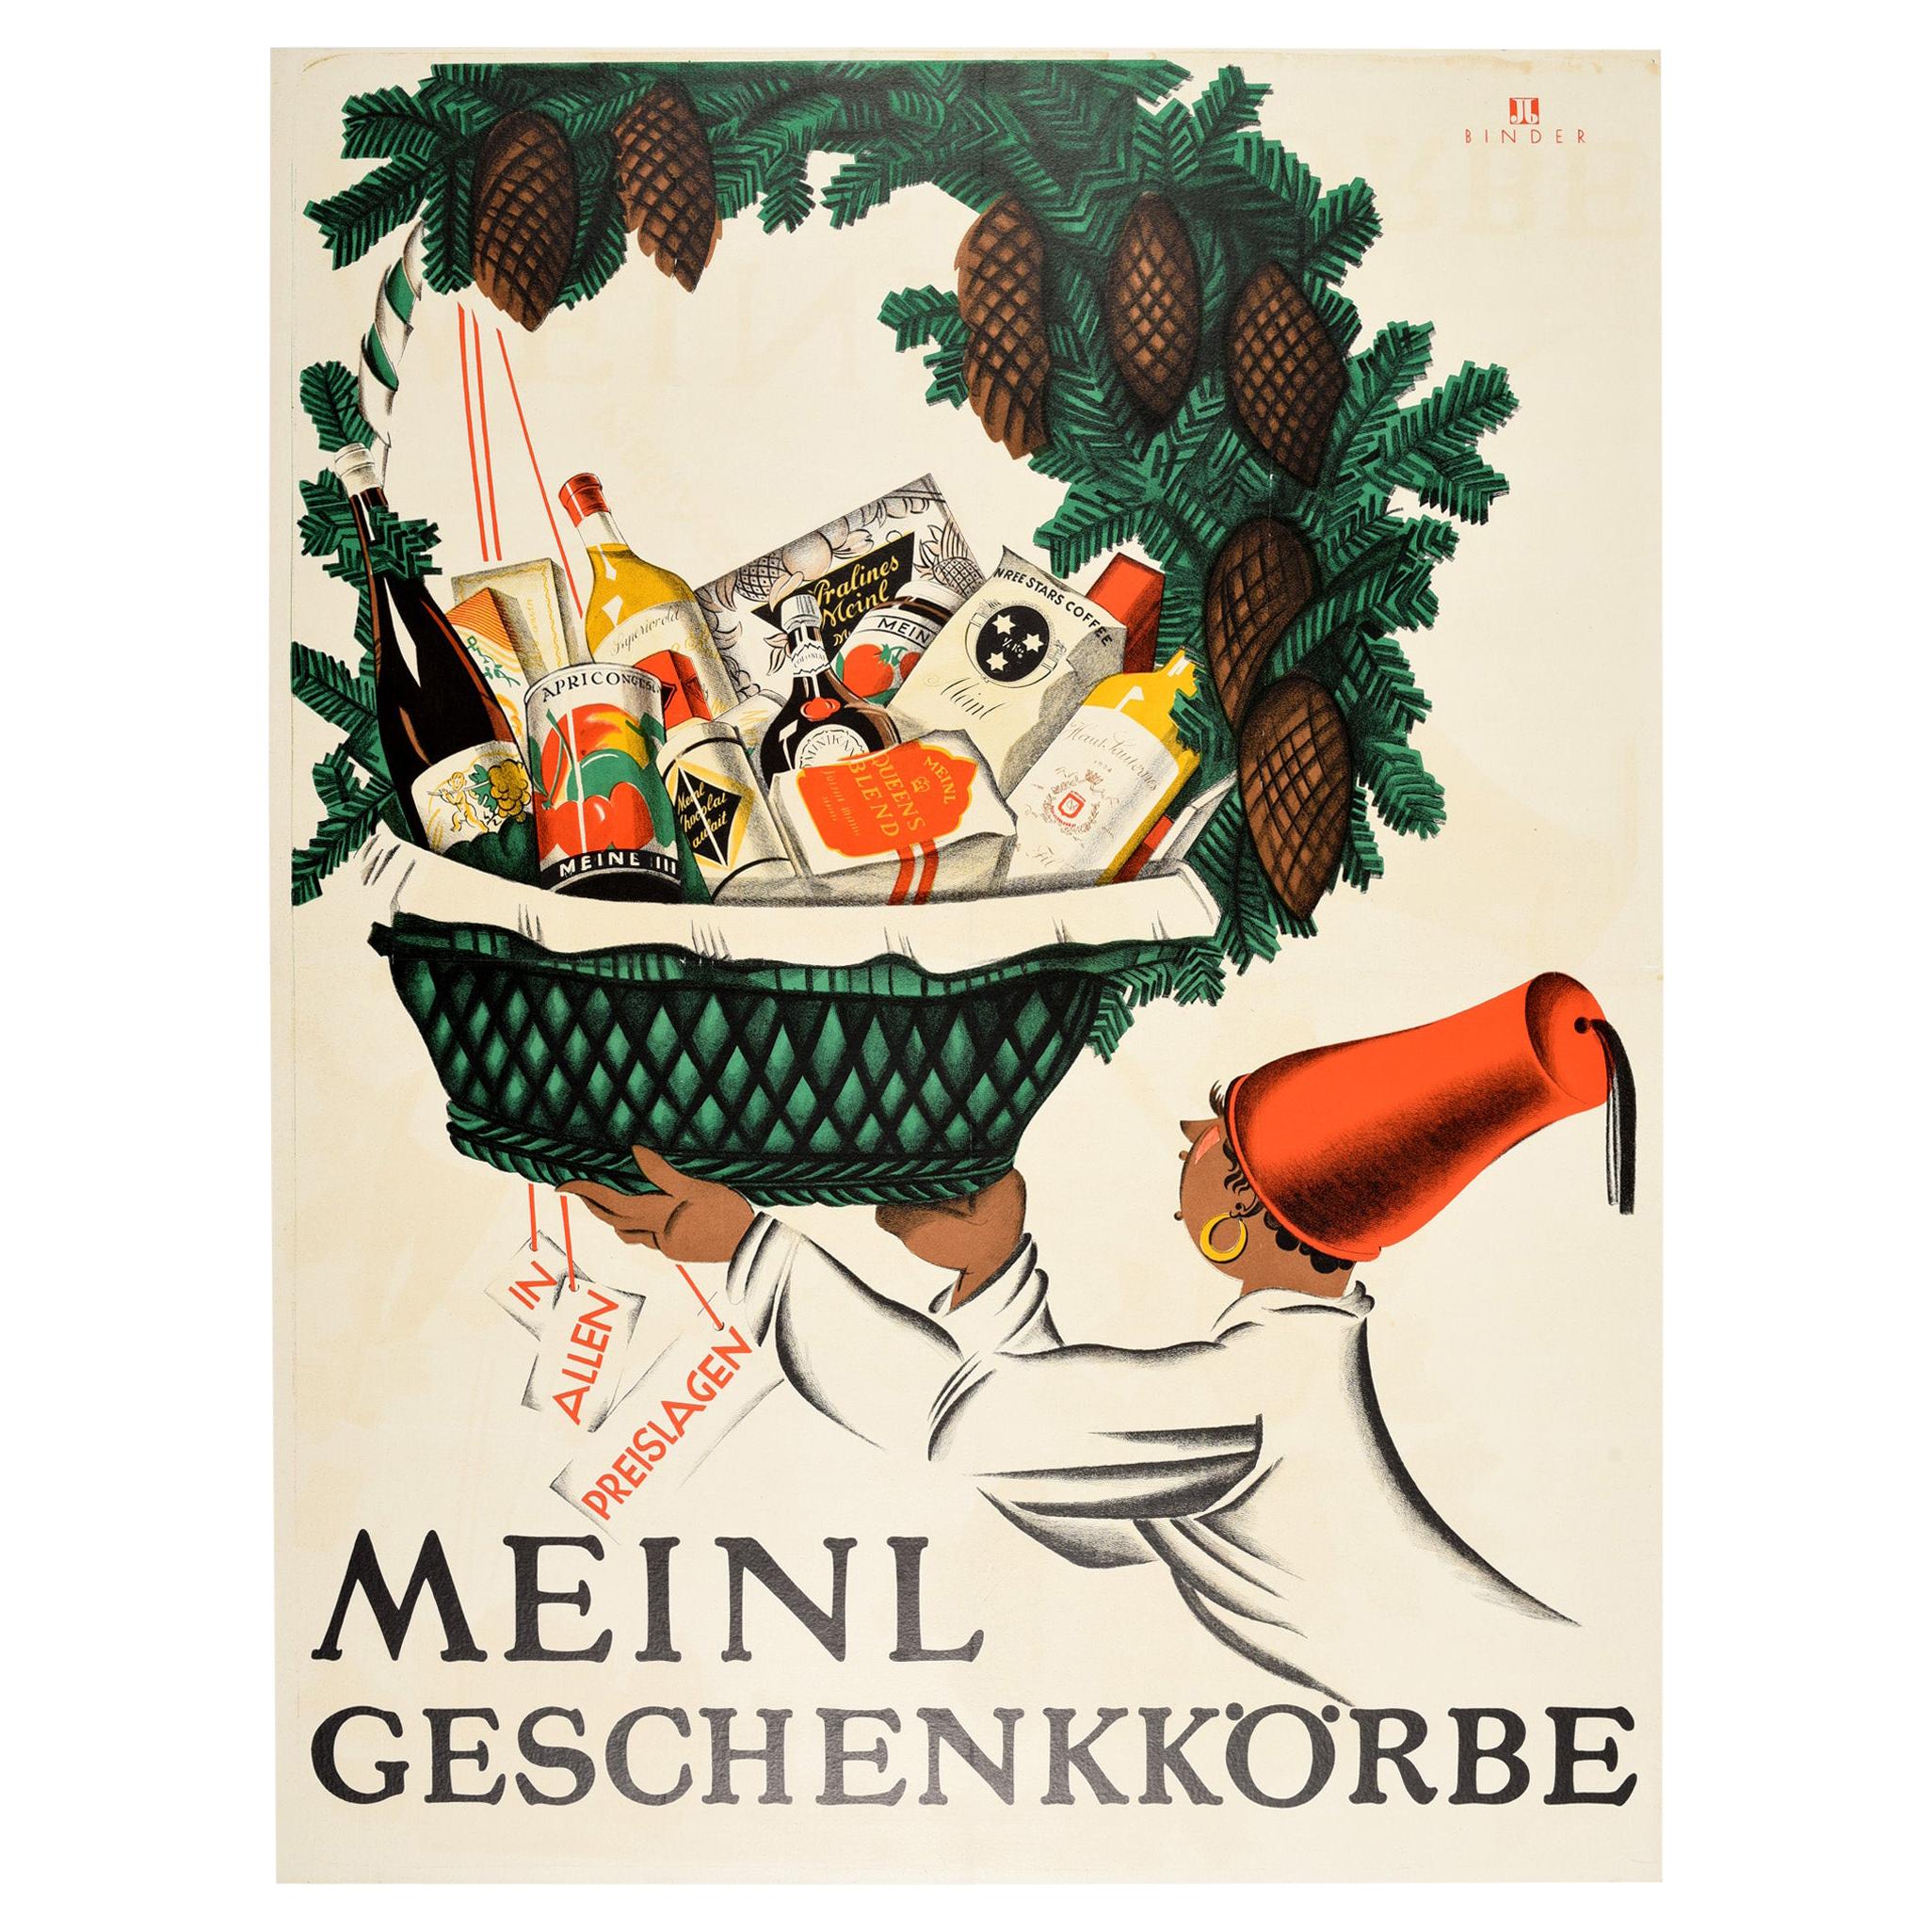 Original Vintage Poster Julius Meinl Geschenkkorbe Gift Basket Food Drink Hamper